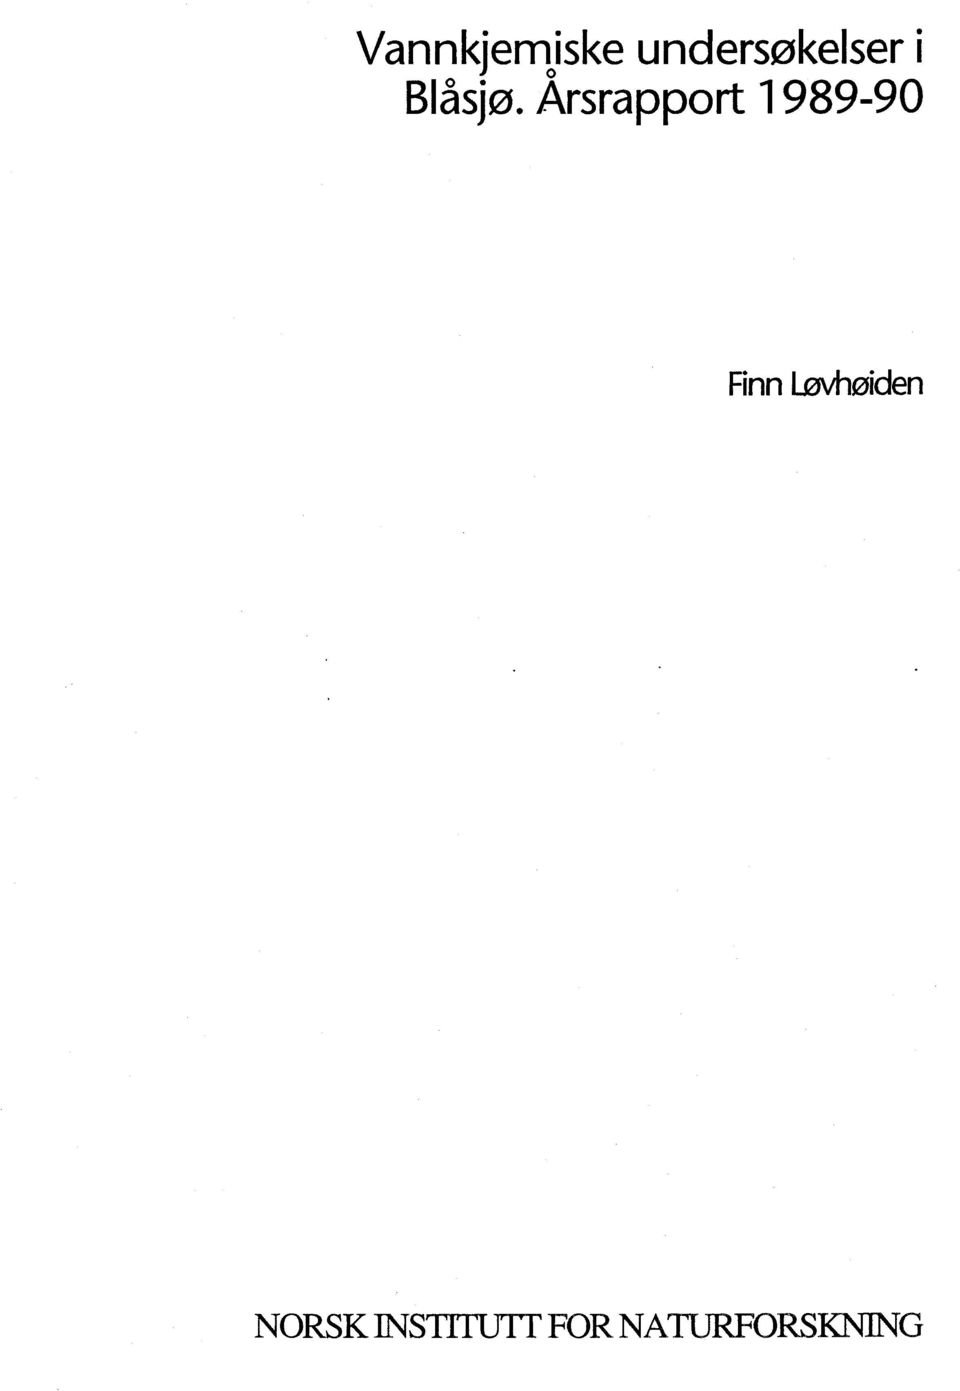 Arsrapport 1989-90 Finn